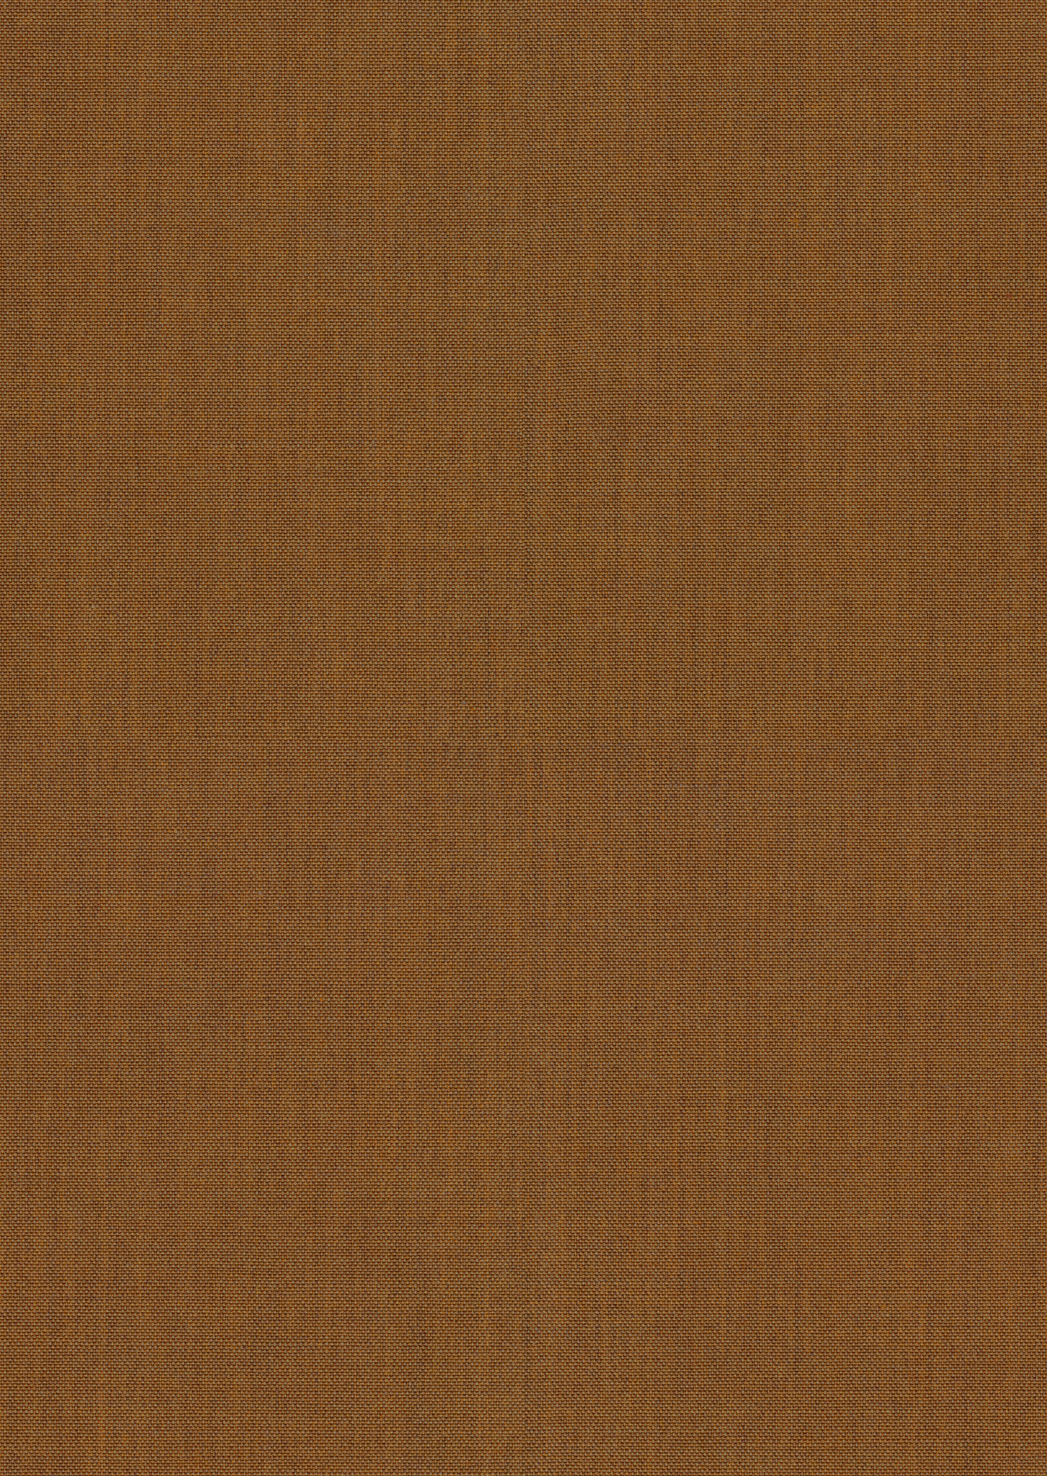 Fabric sample Remix 3 433 brown